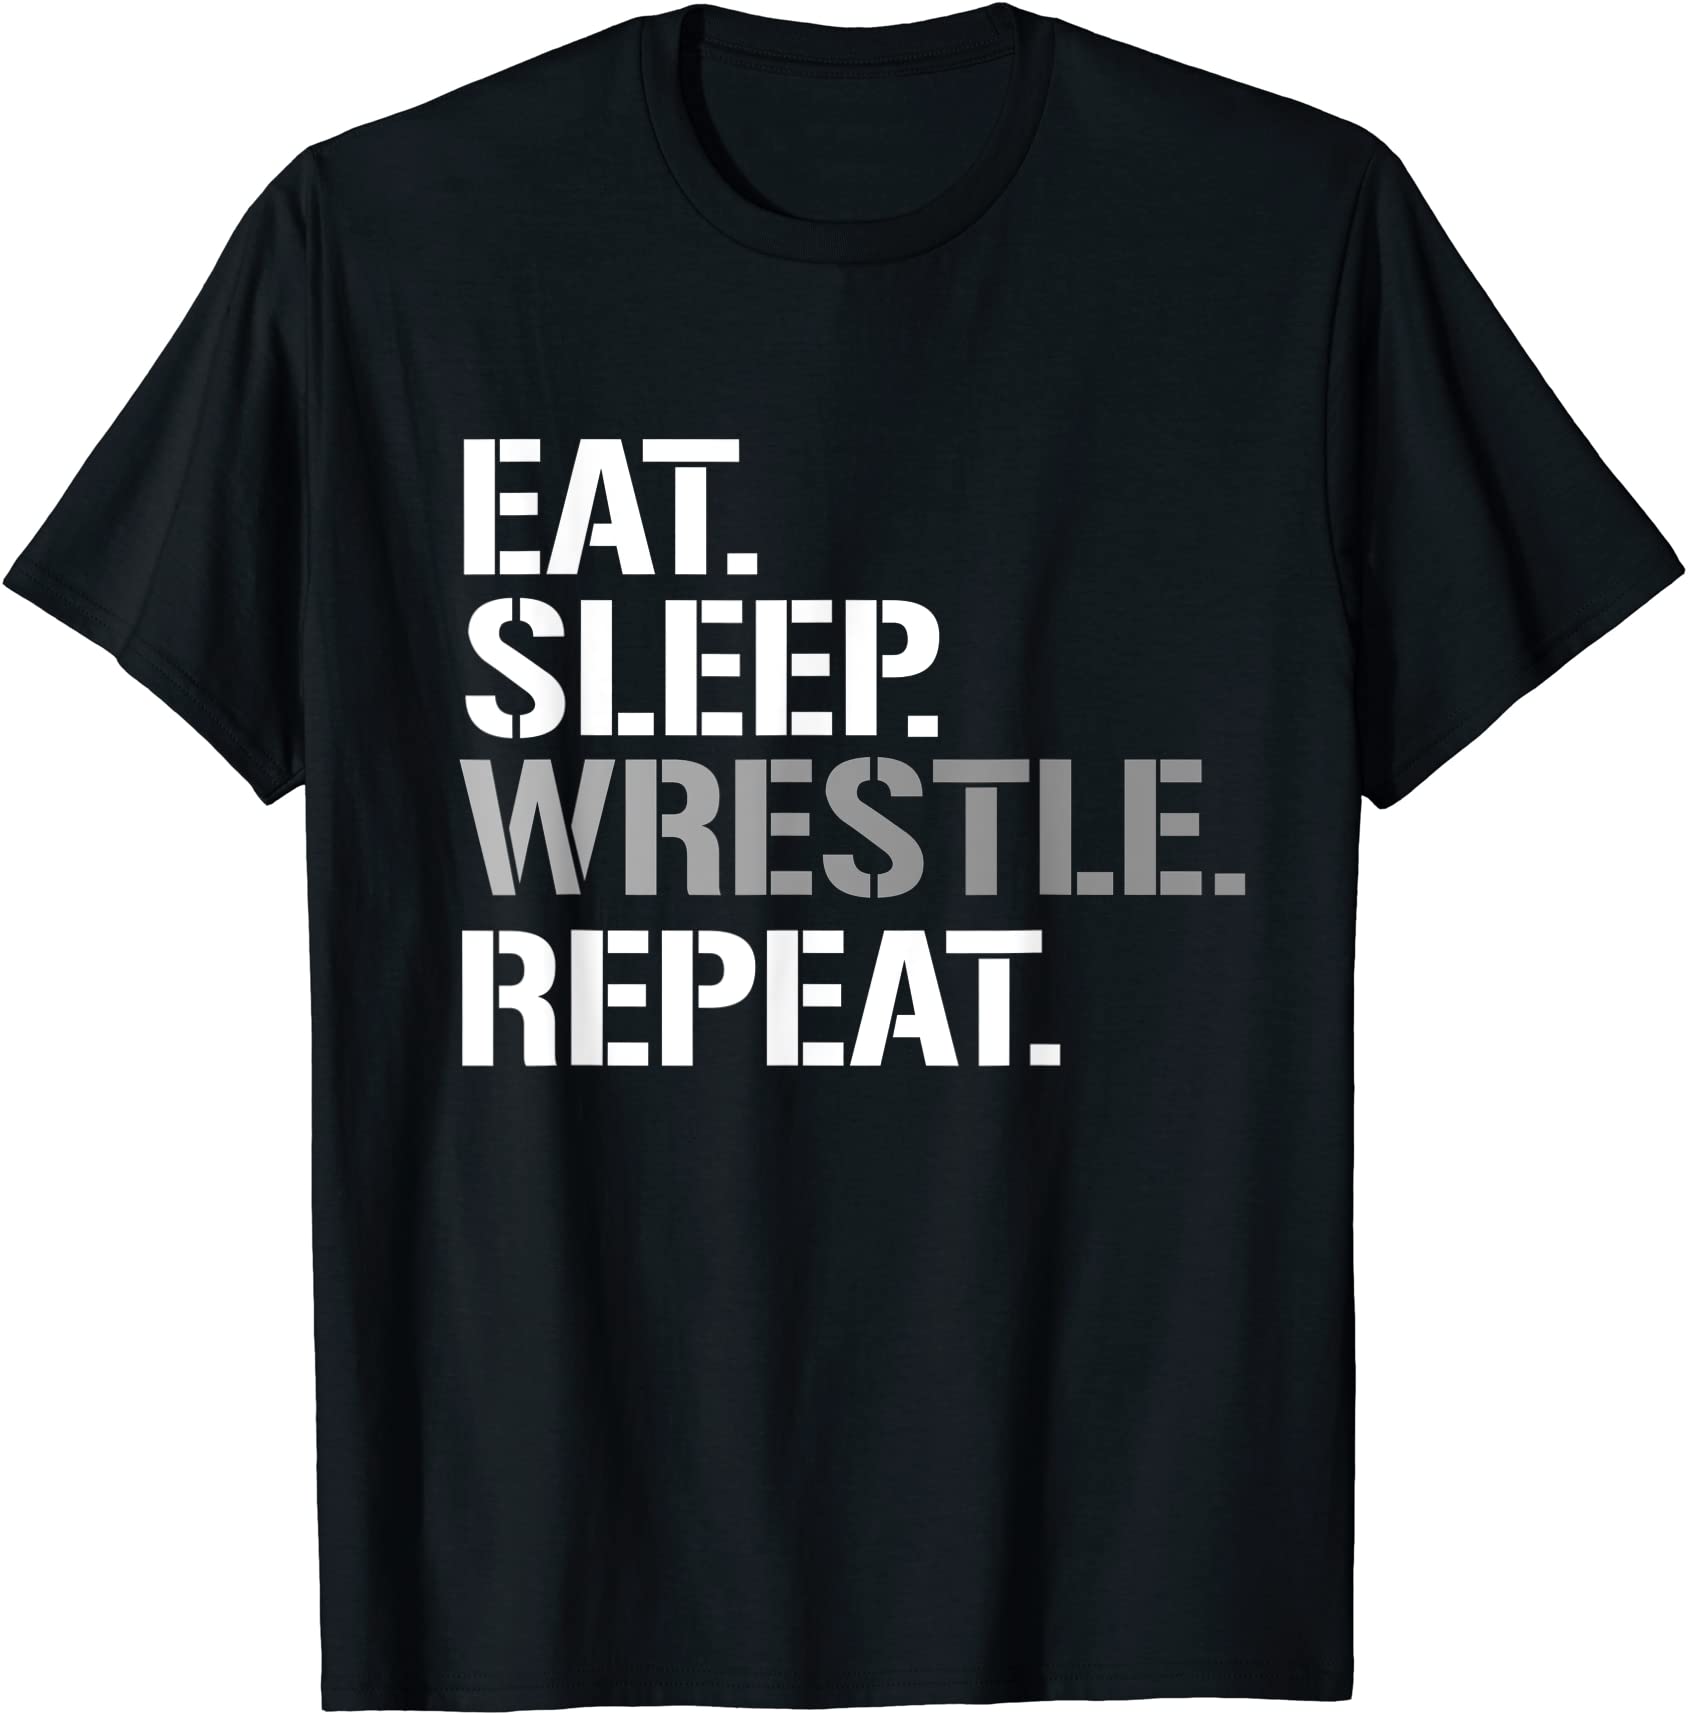 eat sleep wrestle shirt repeat cool wrestling t shirt men - Buy t-shirt ...